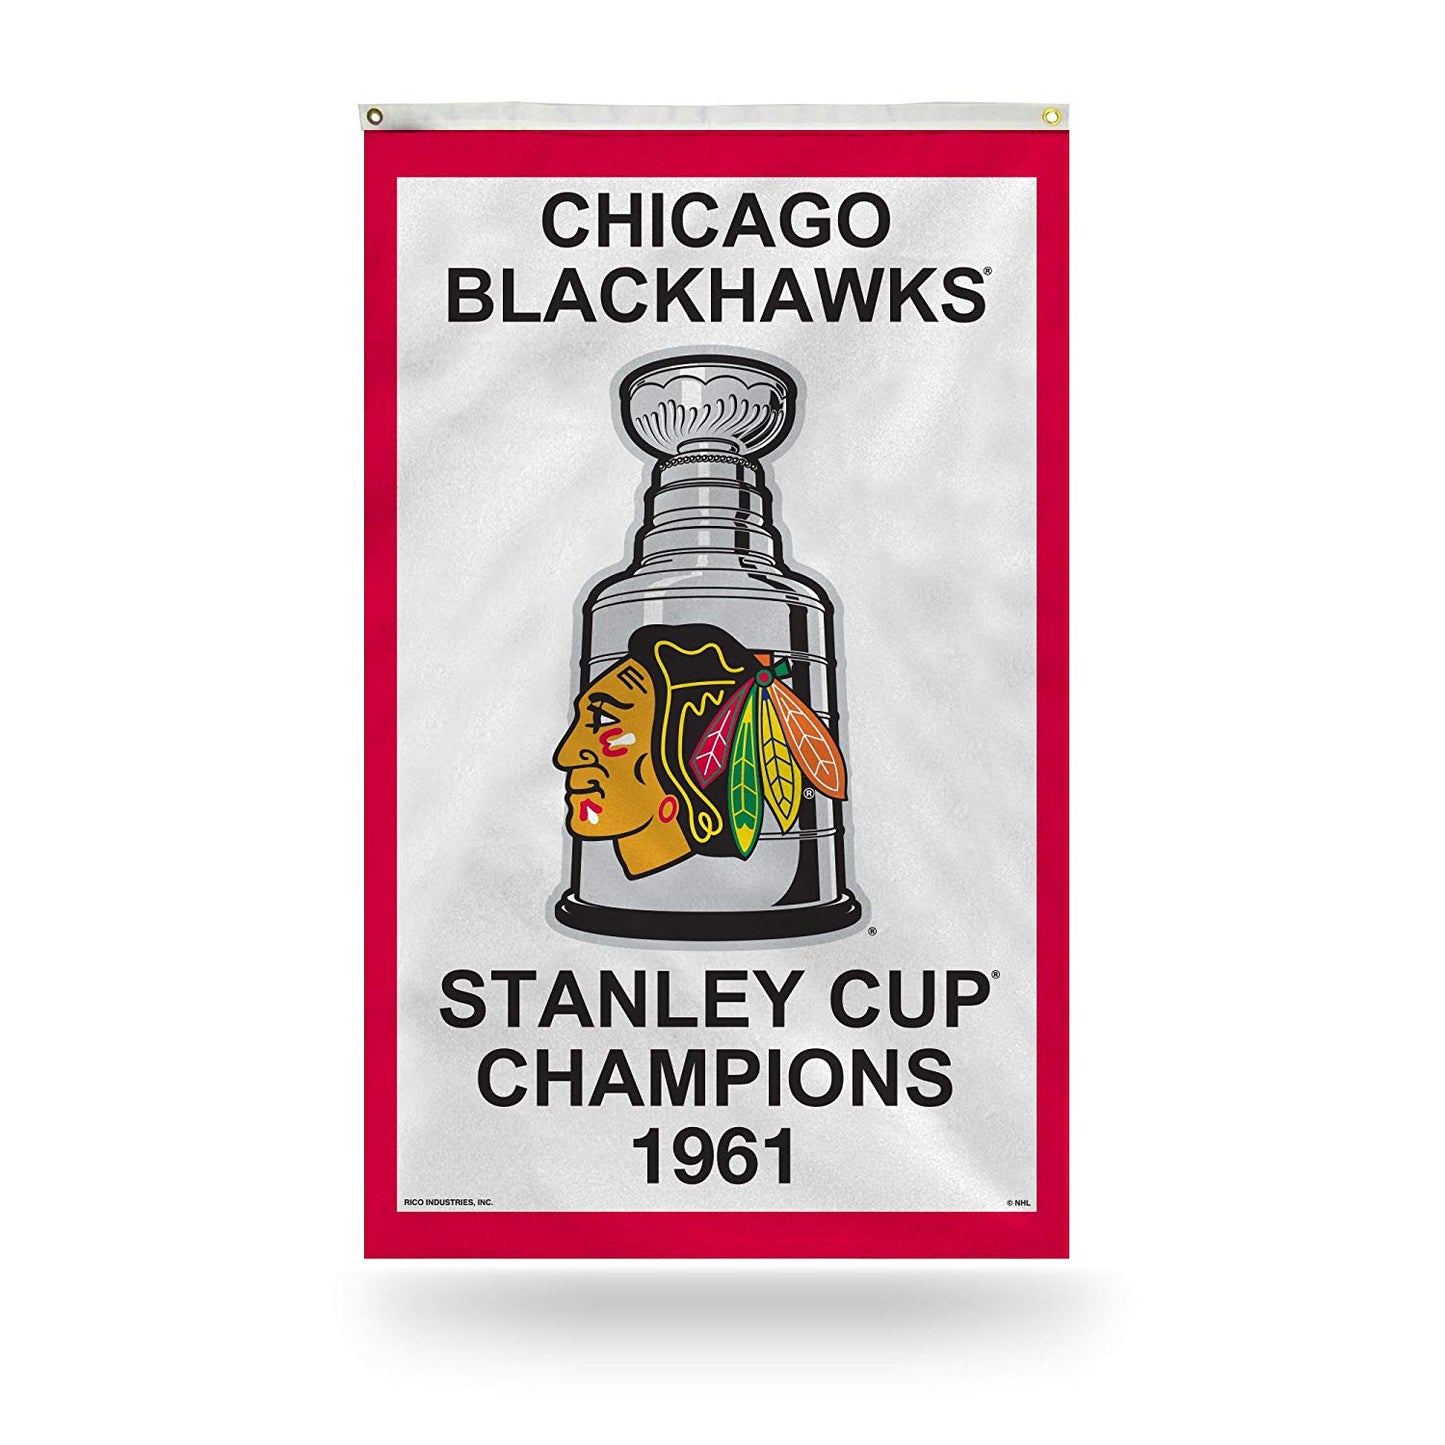 Chicago Blackhawks 1961 Stanley Cup Champions 3' x 5' Vertical Banner Flag